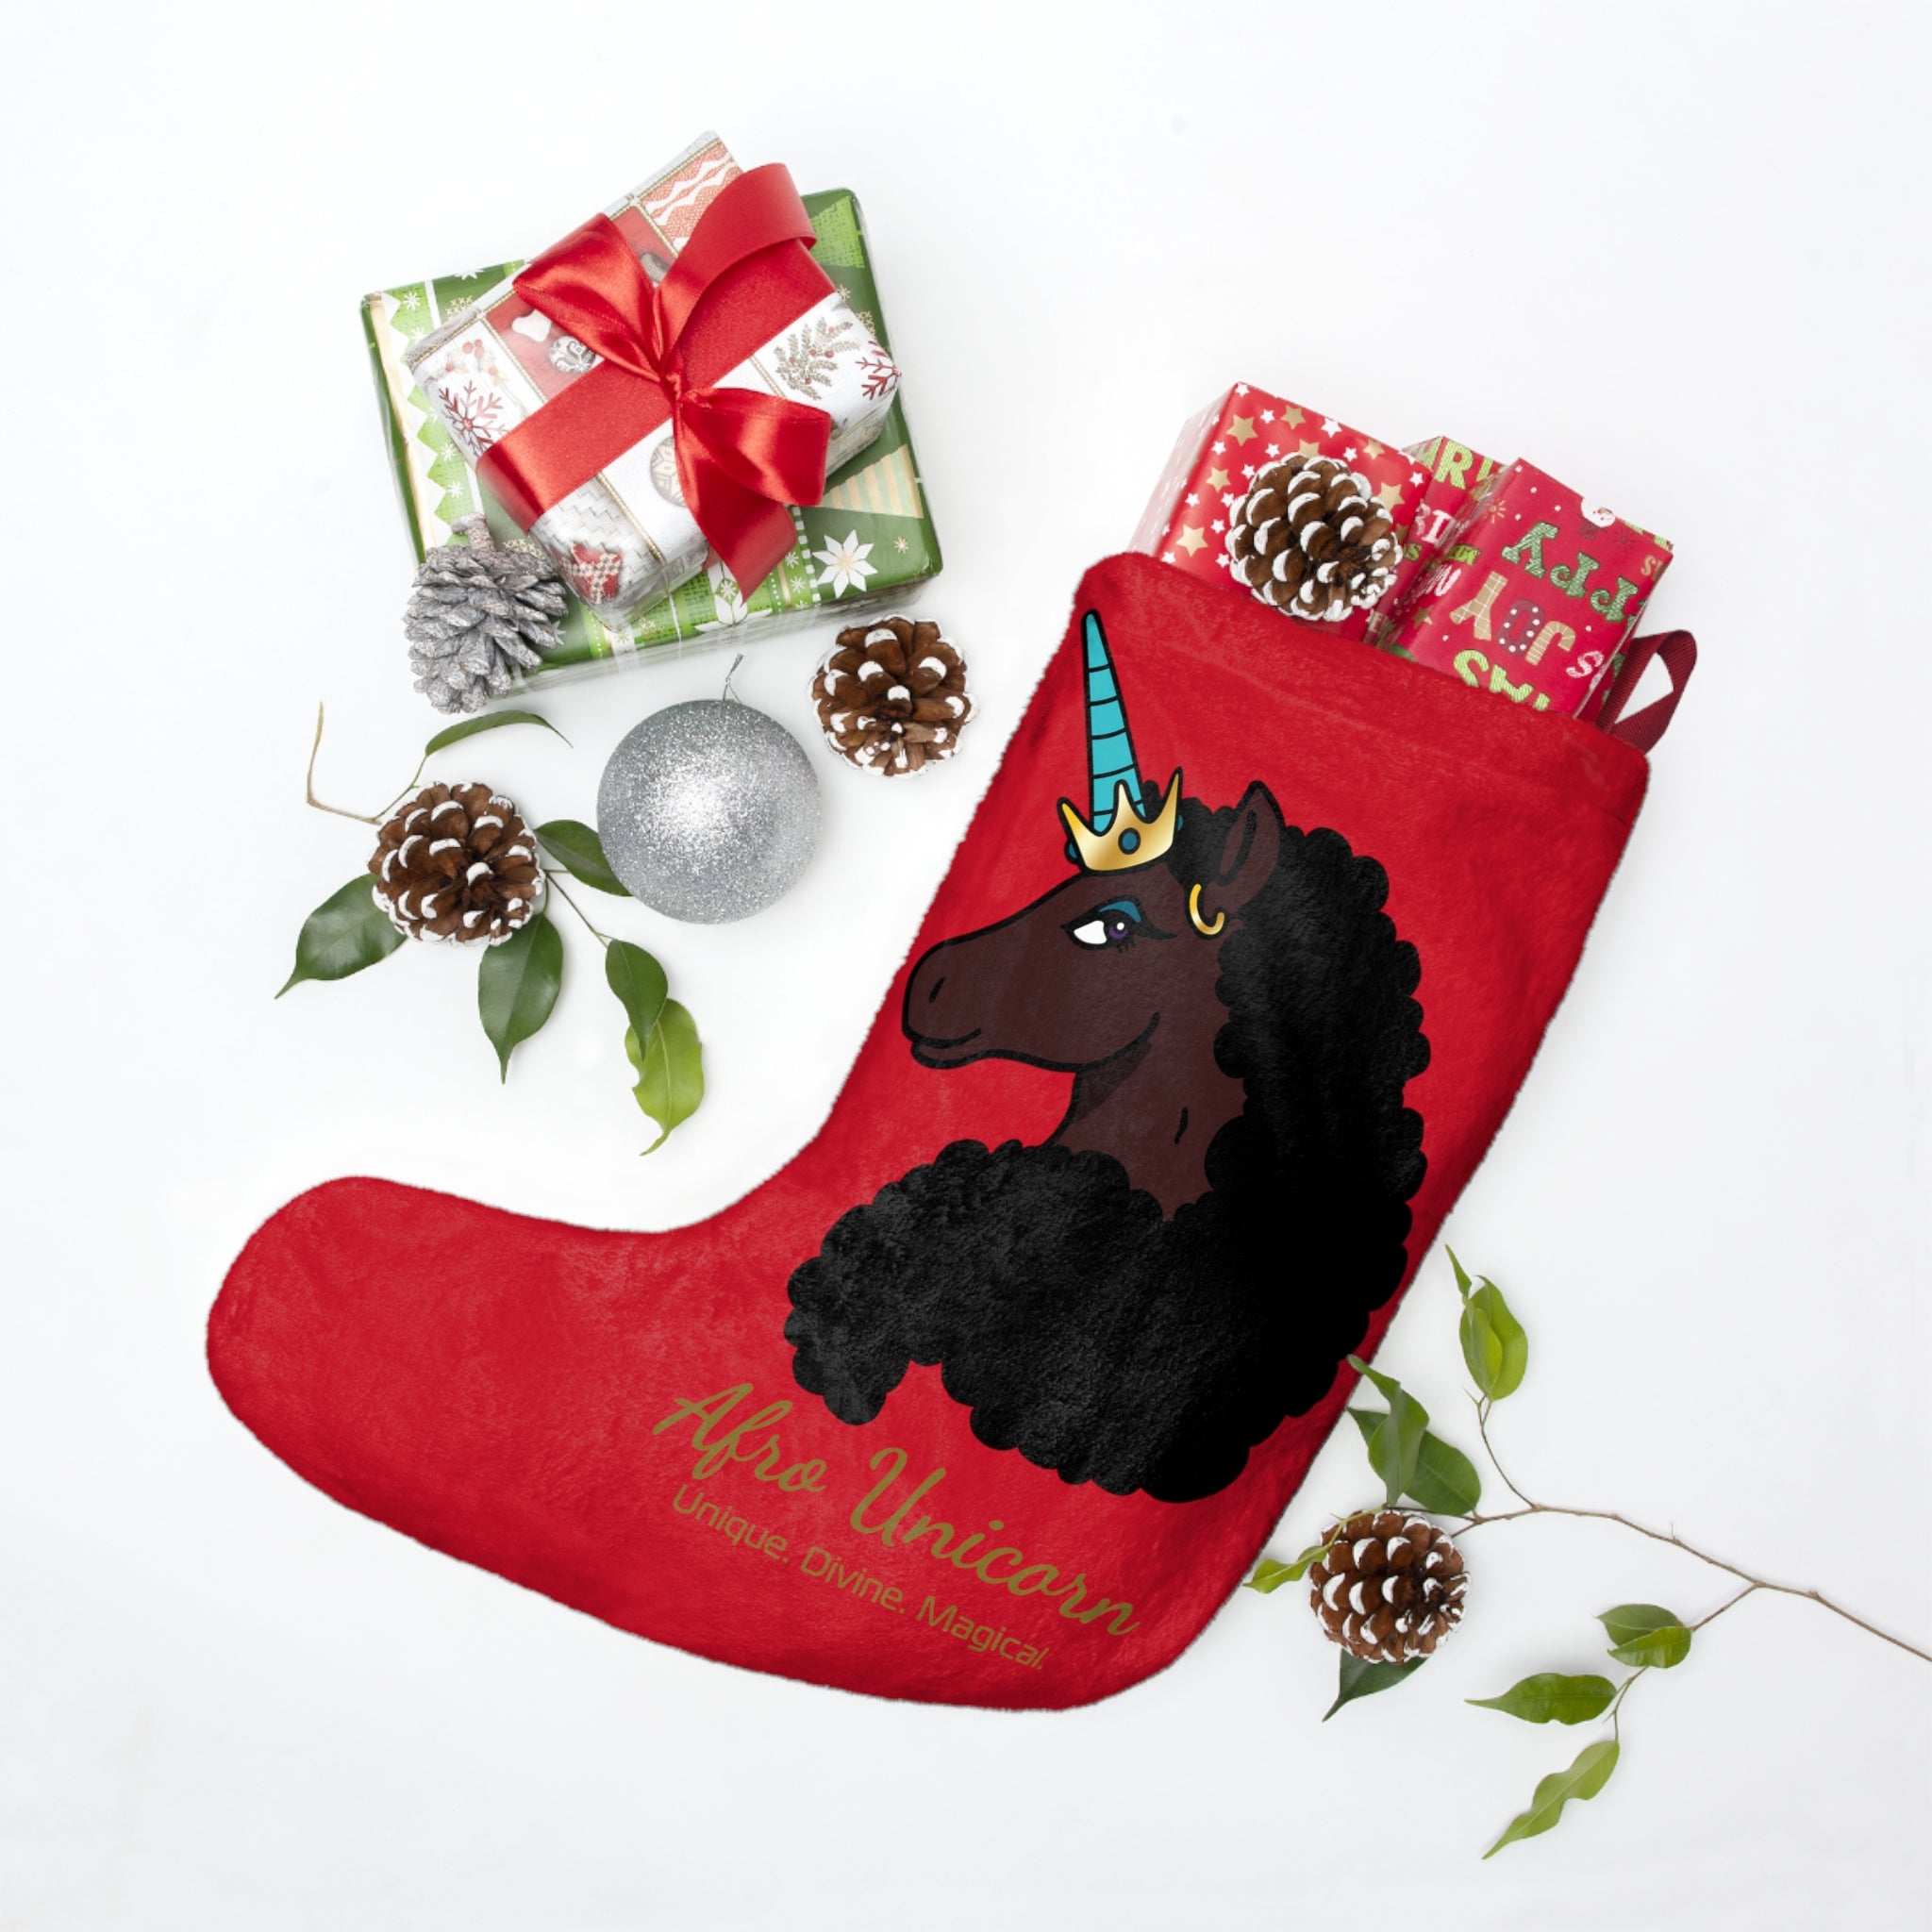 Afro Unicorn  Christmas Stockings - Mocha